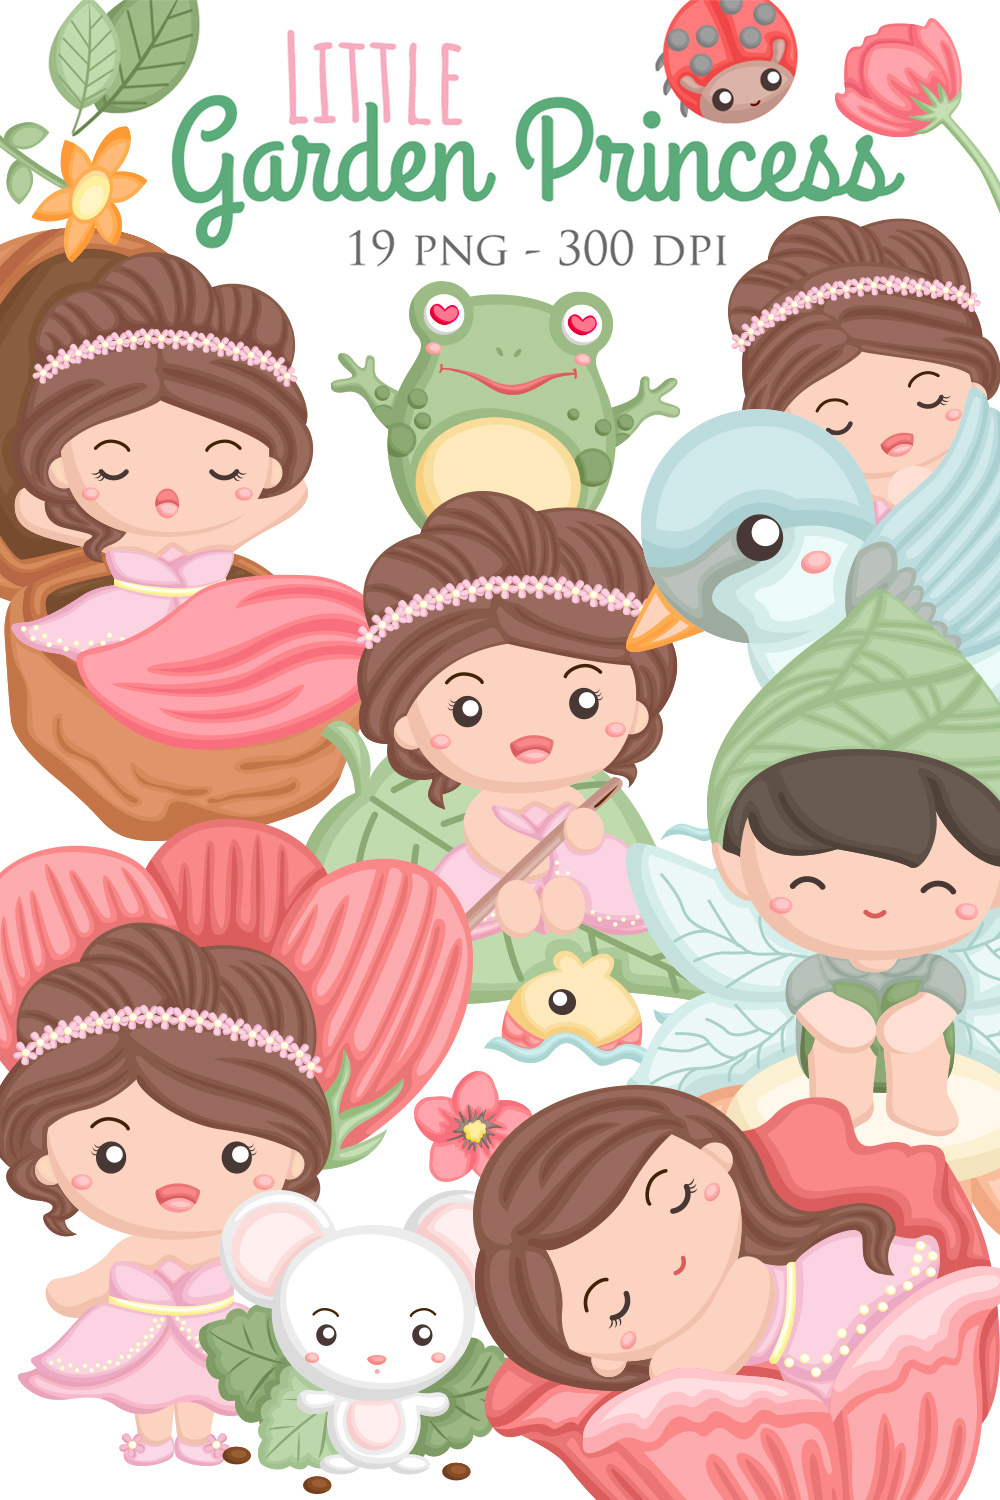 Cute Beautiful Pink Little Garden Princess Girl Kids and Animal Cartoon Illustration Vector Clipart Sticker Background Decoration pinterest preview image.